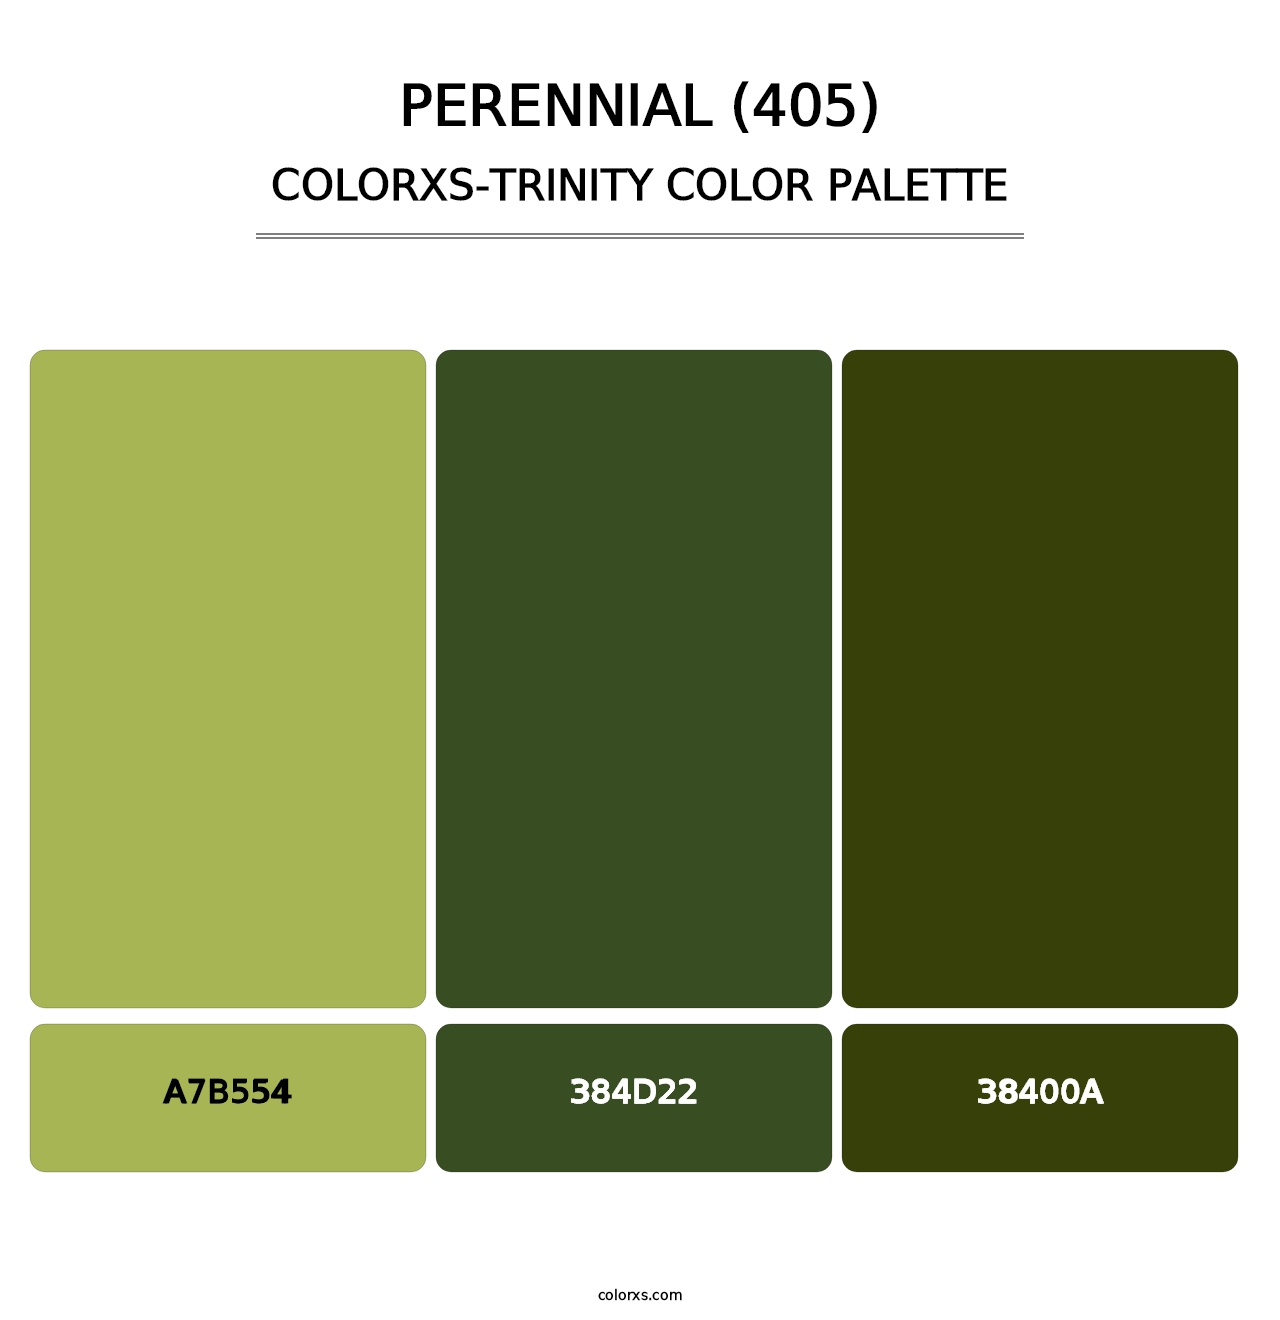 Perennial (405) - Colorxs Trinity Palette